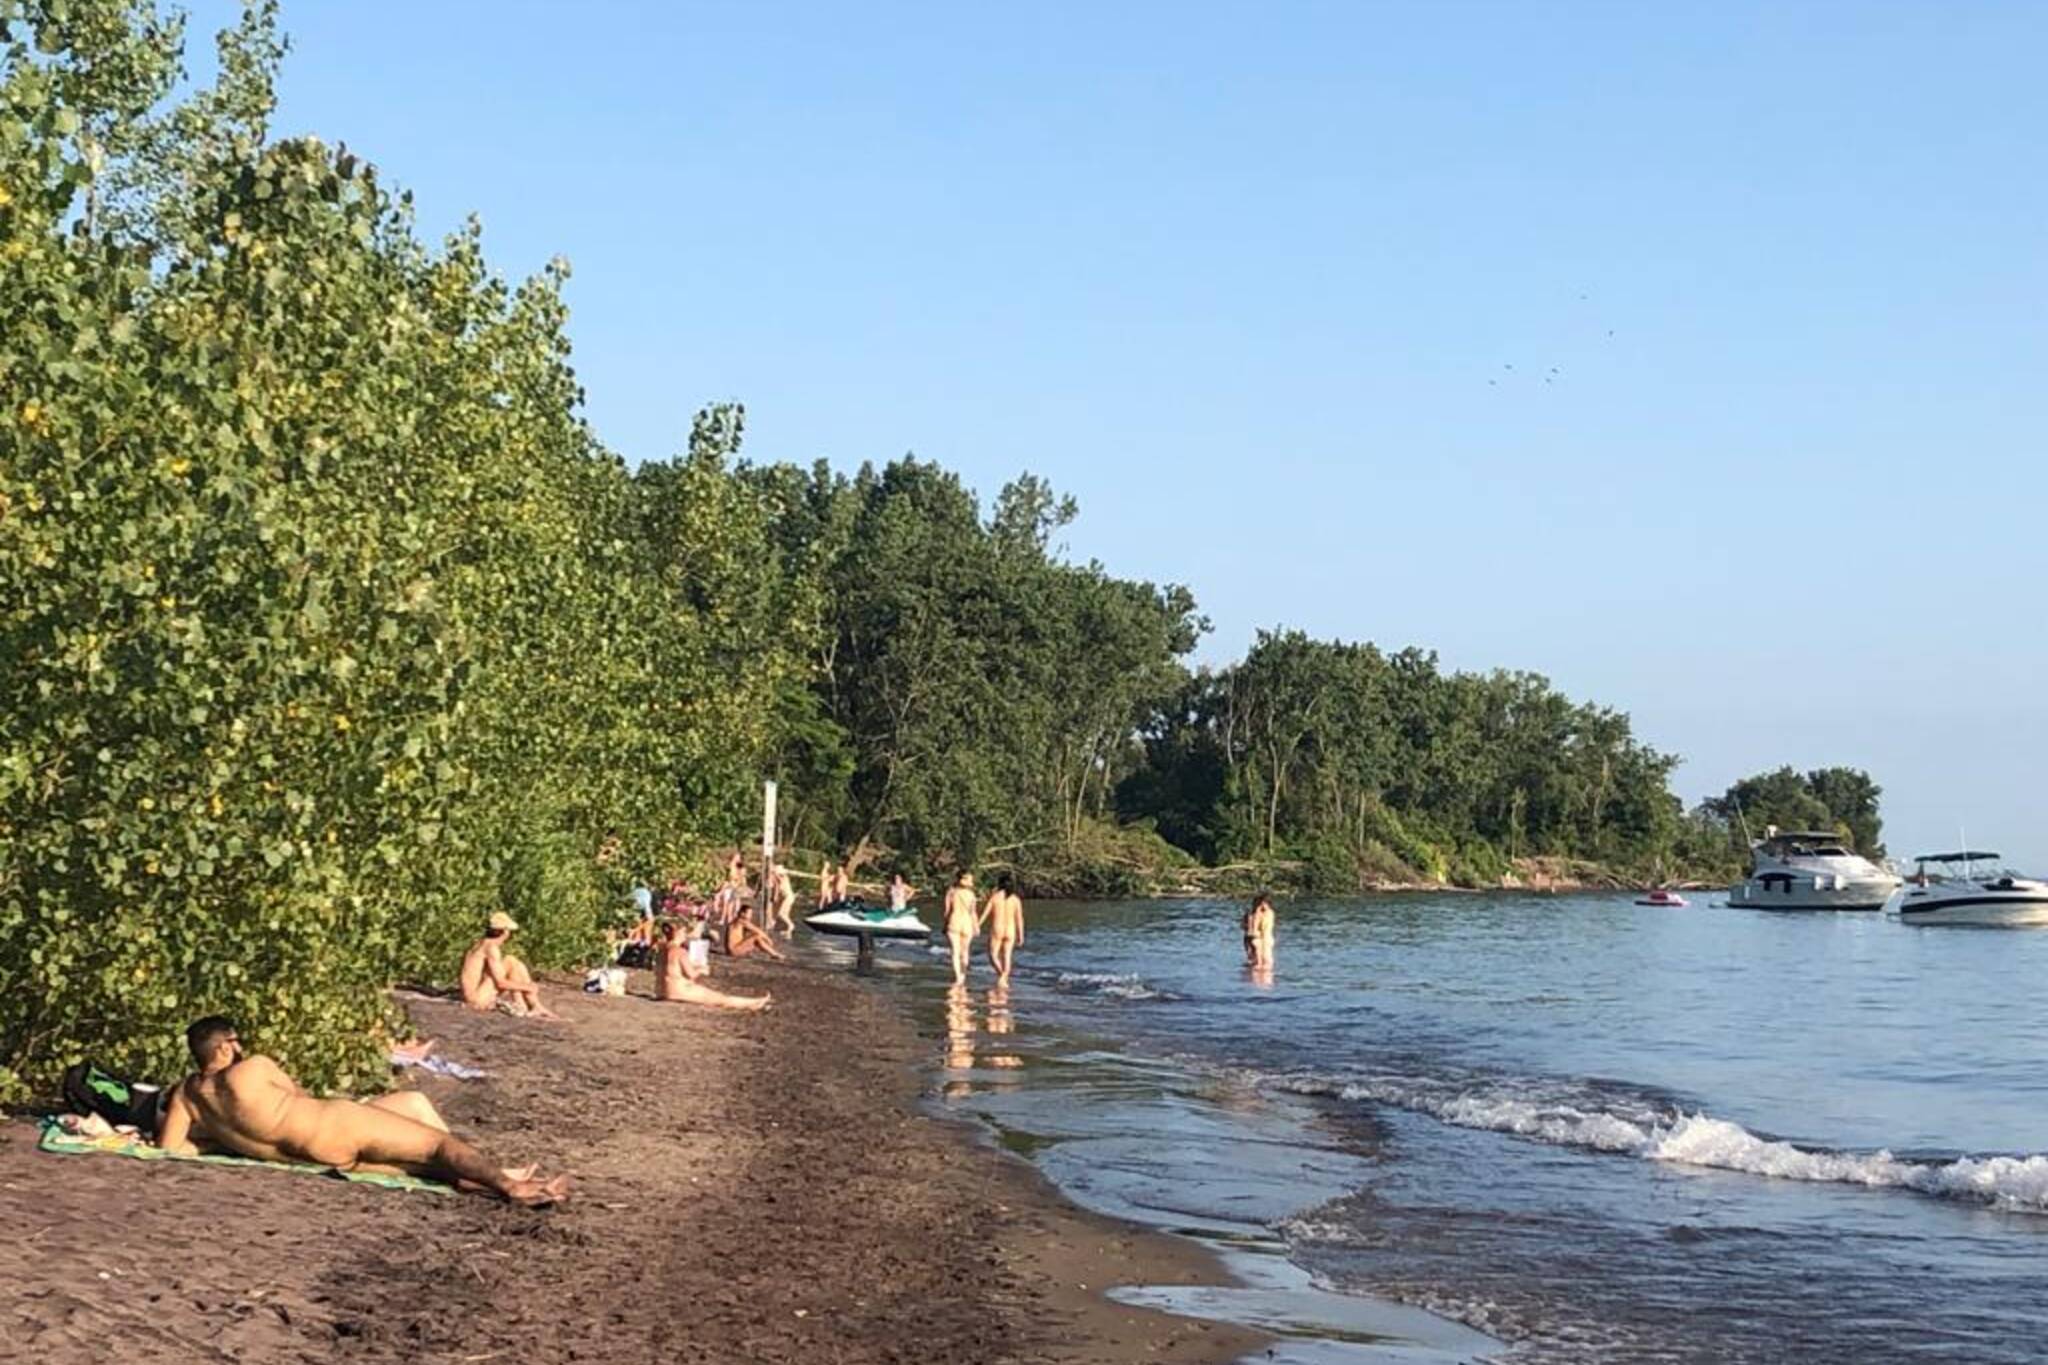 Happy Beach Nude - Hanlan's Point is the Toronto Island's famous nude beach